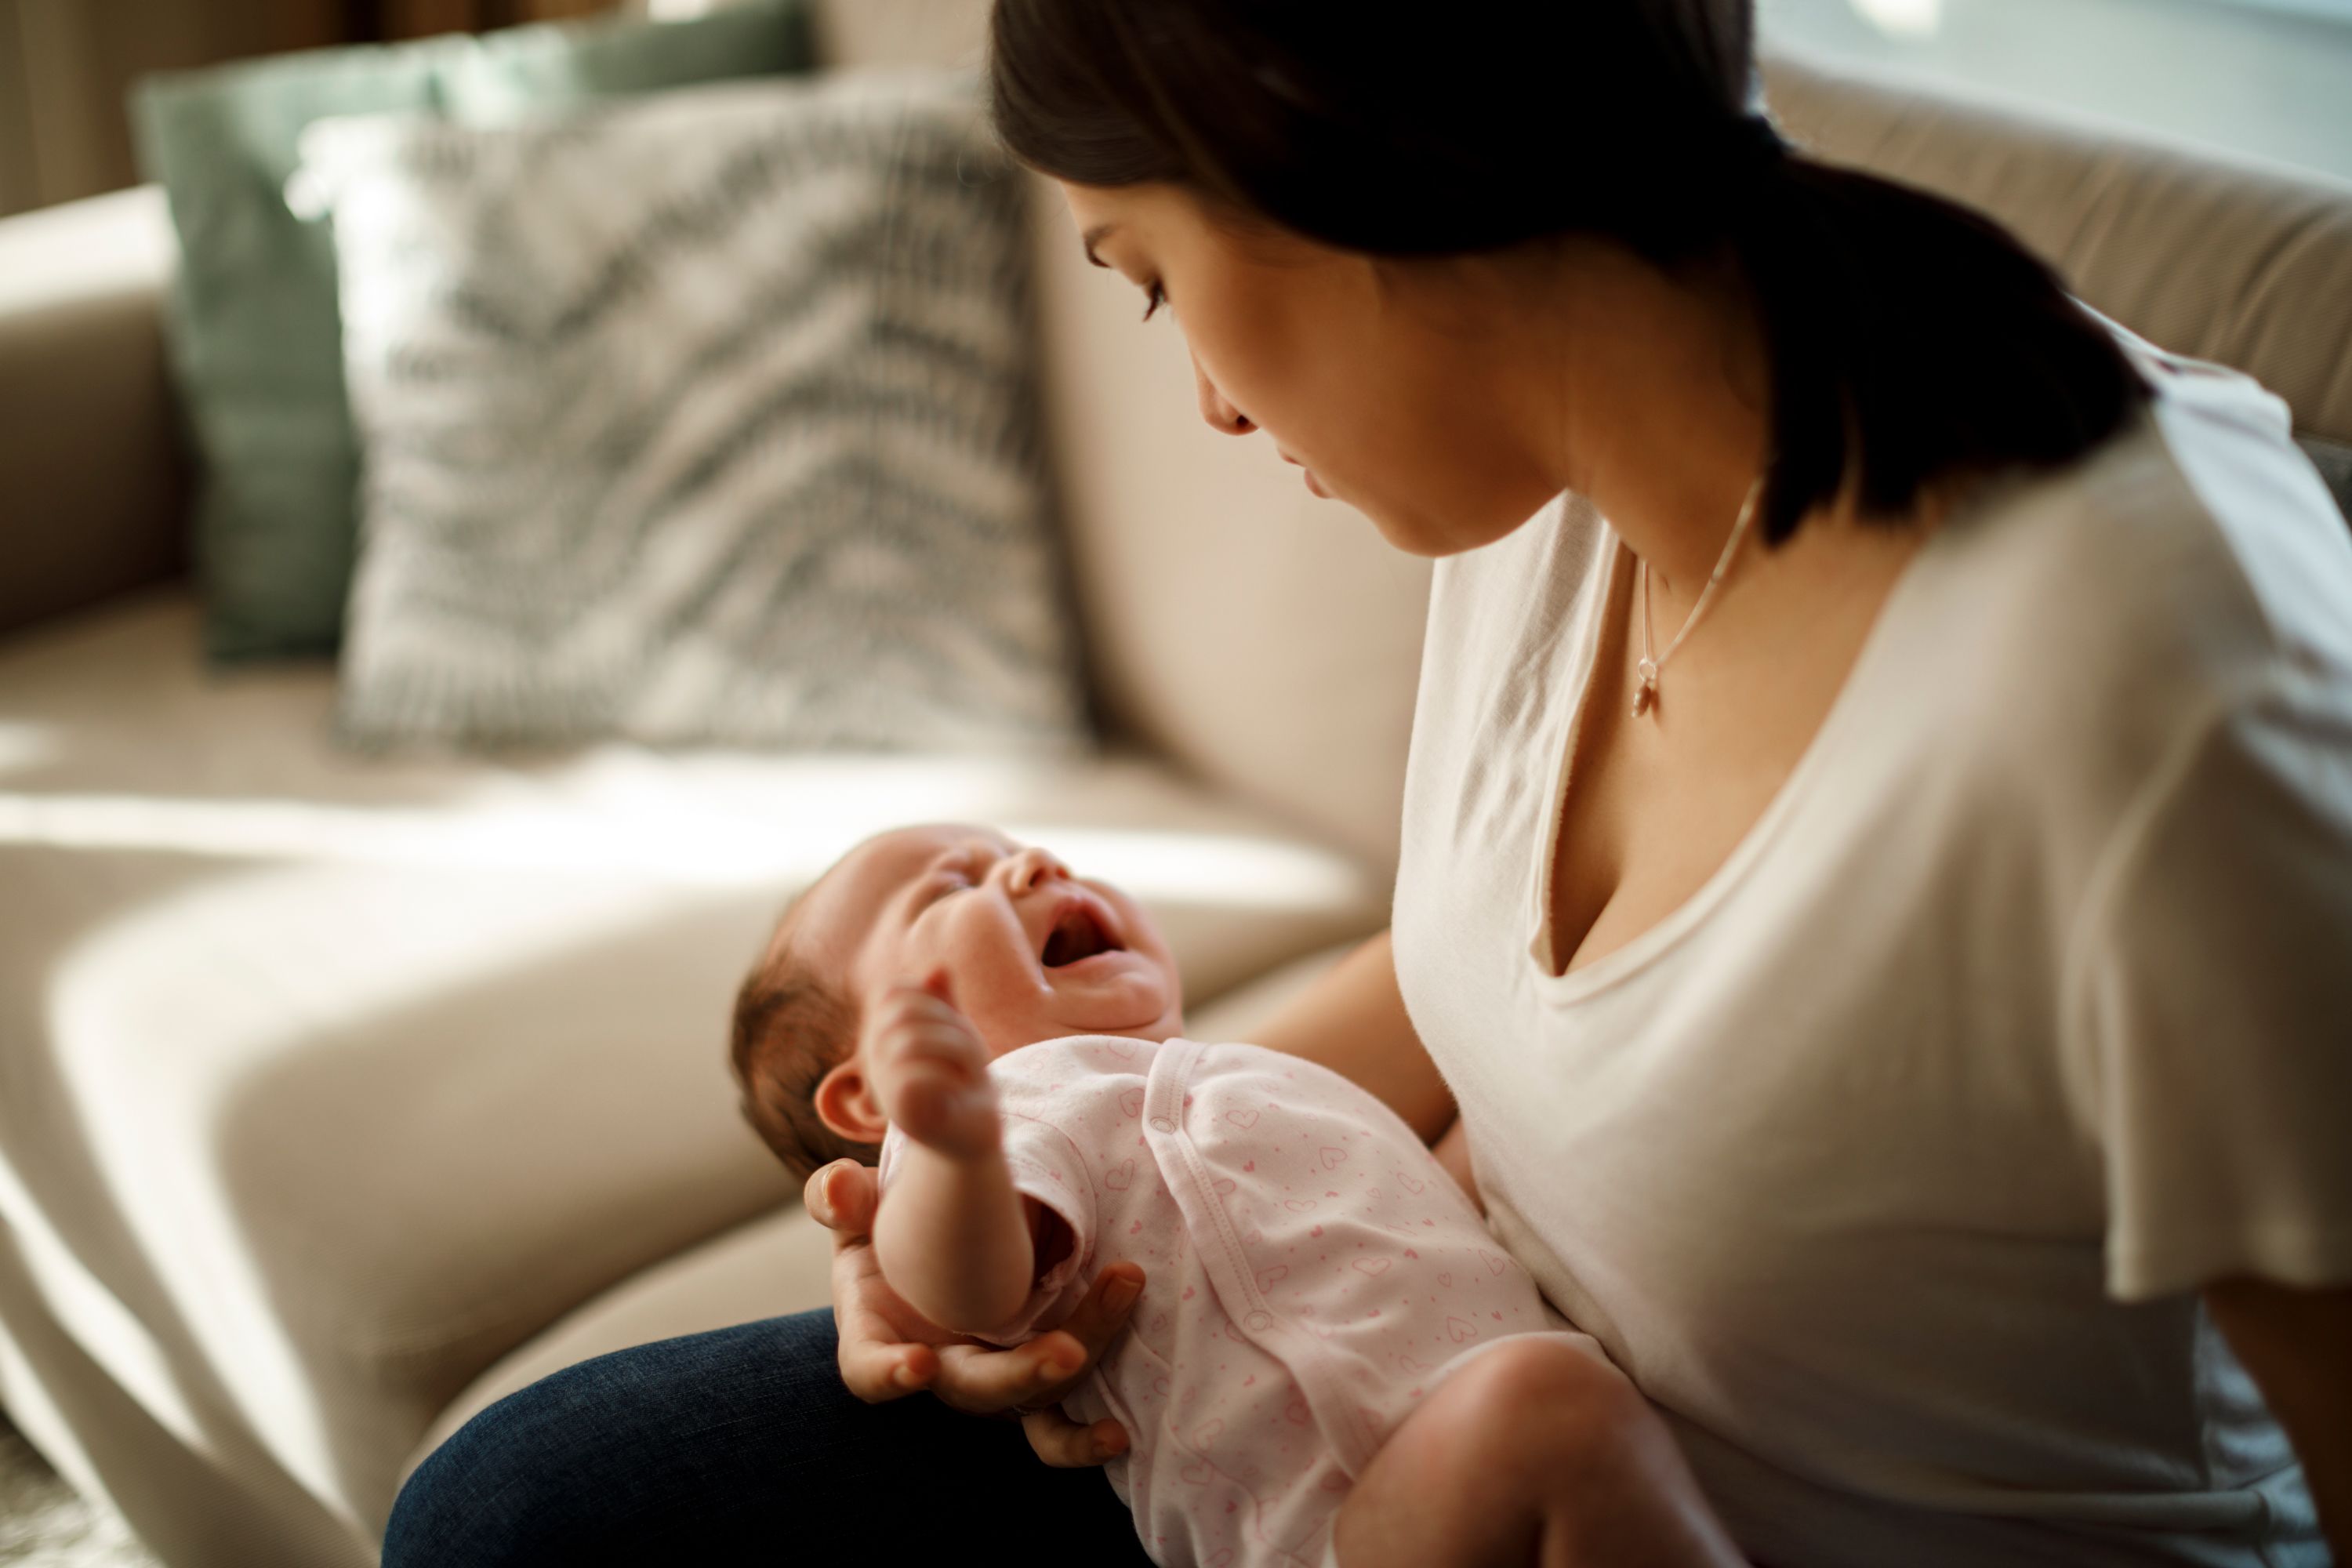 Postpartum Depression Intervention & Family Support - Northwestern Mothers  & Babies